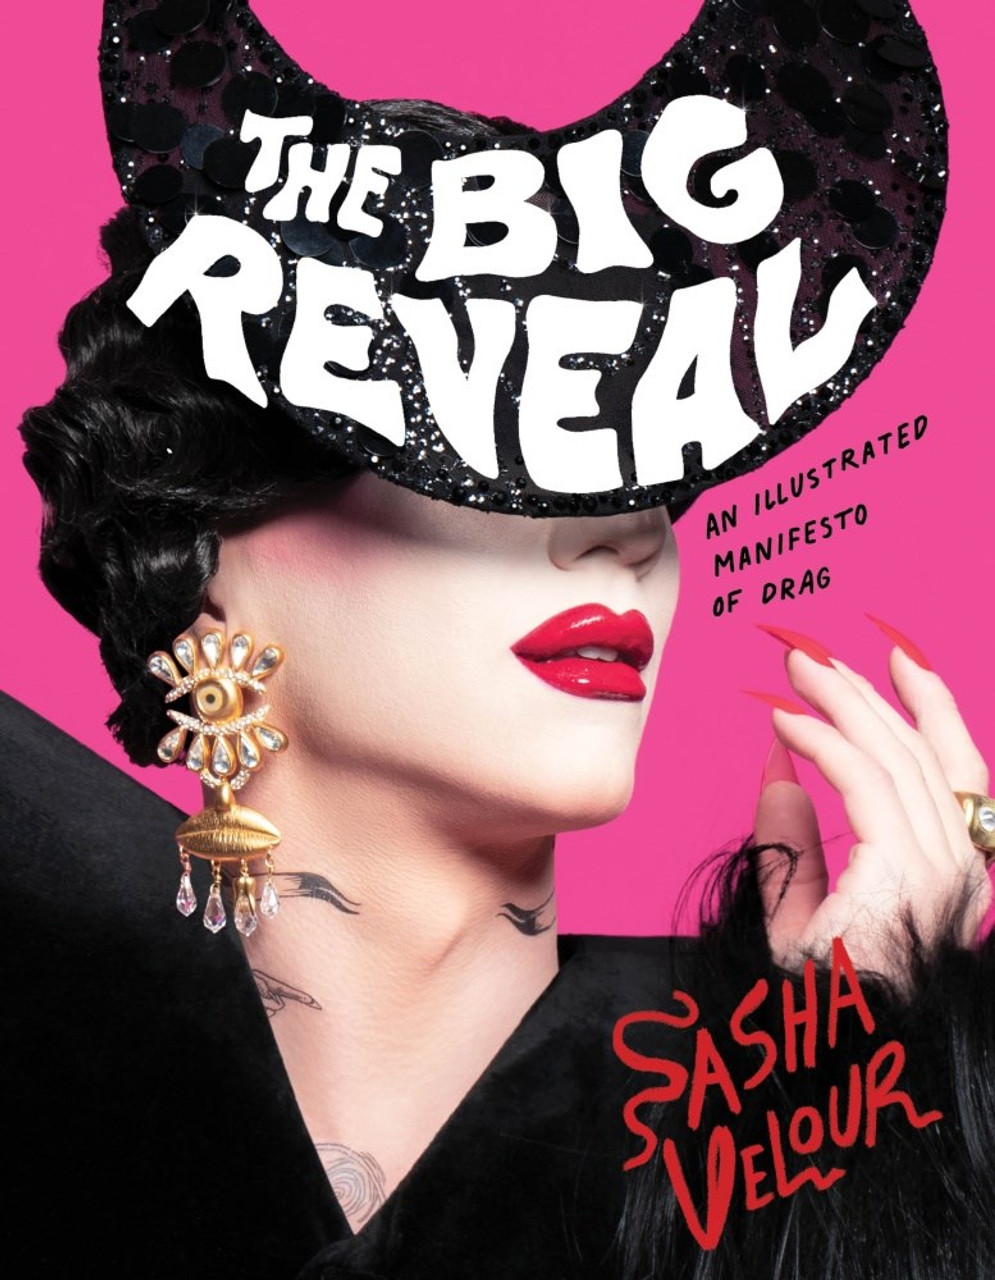 The Big Reveal by Sasha Velour